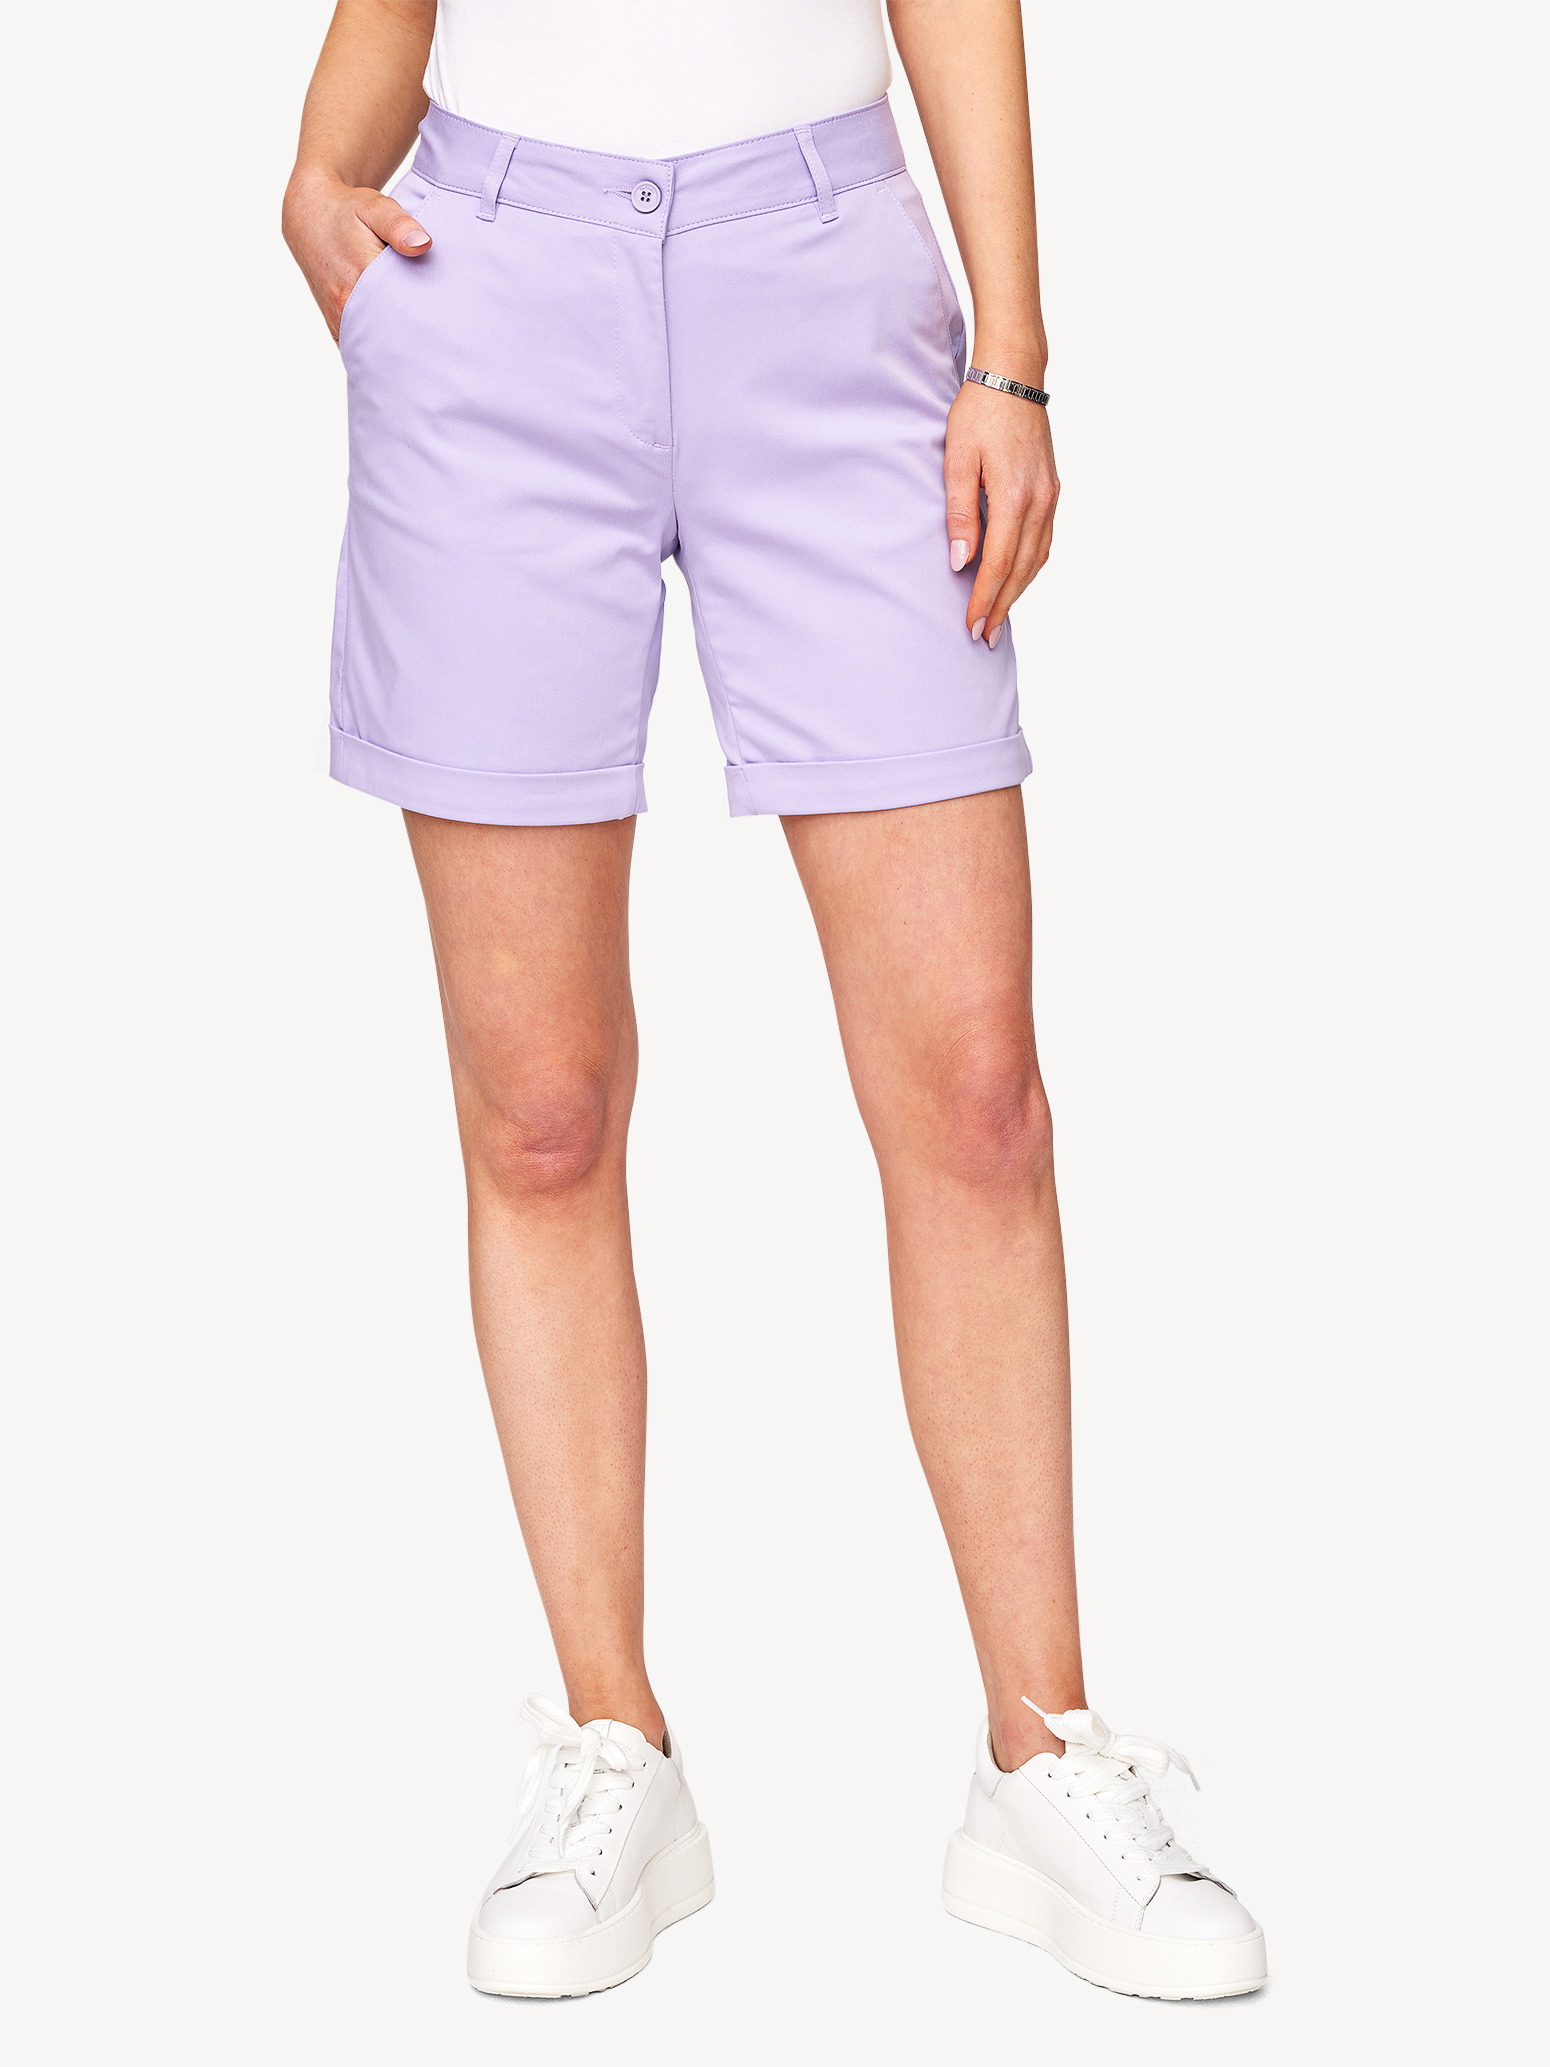 Shorts - purple, Lavender, hi-res